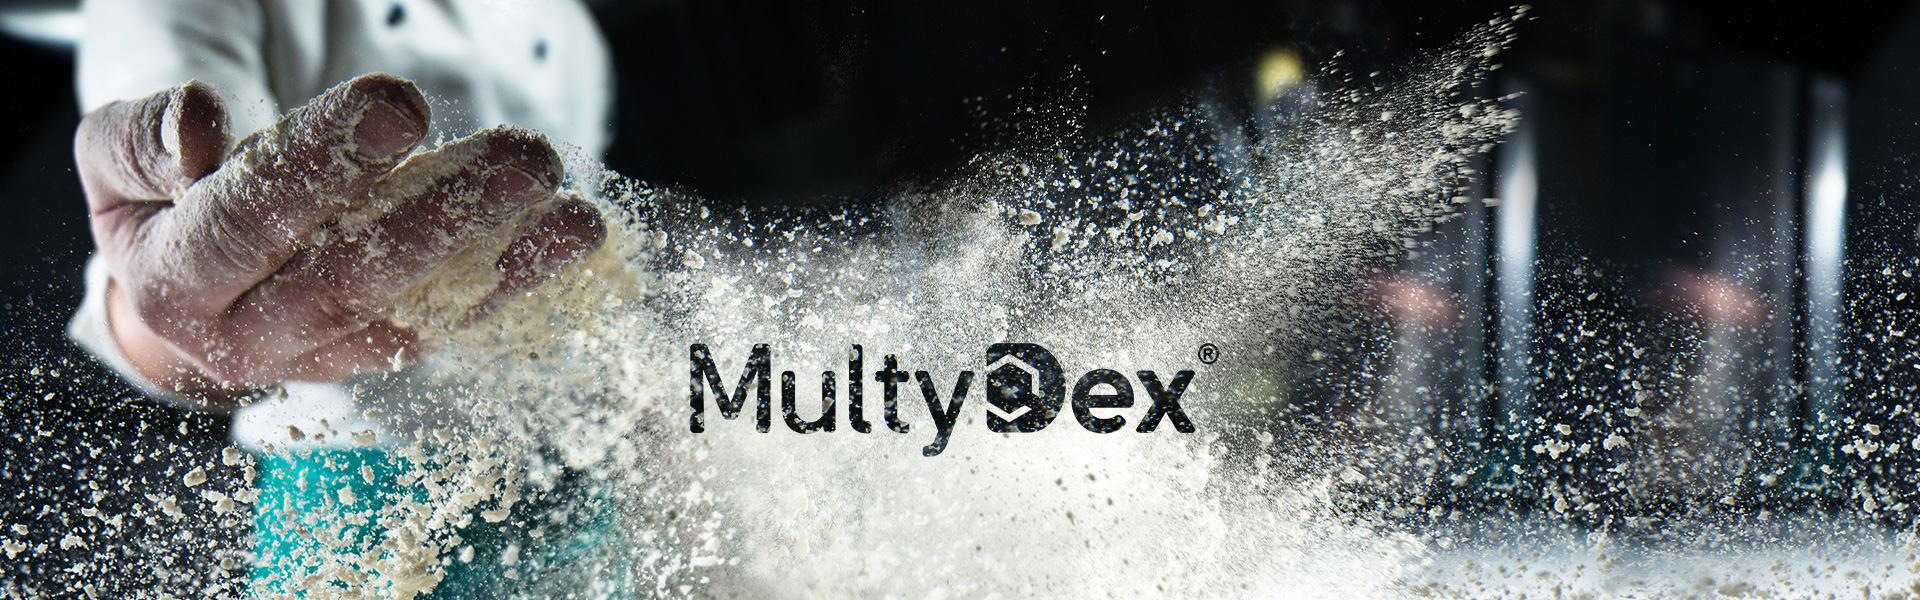 Multydex® by Customer’s Specs